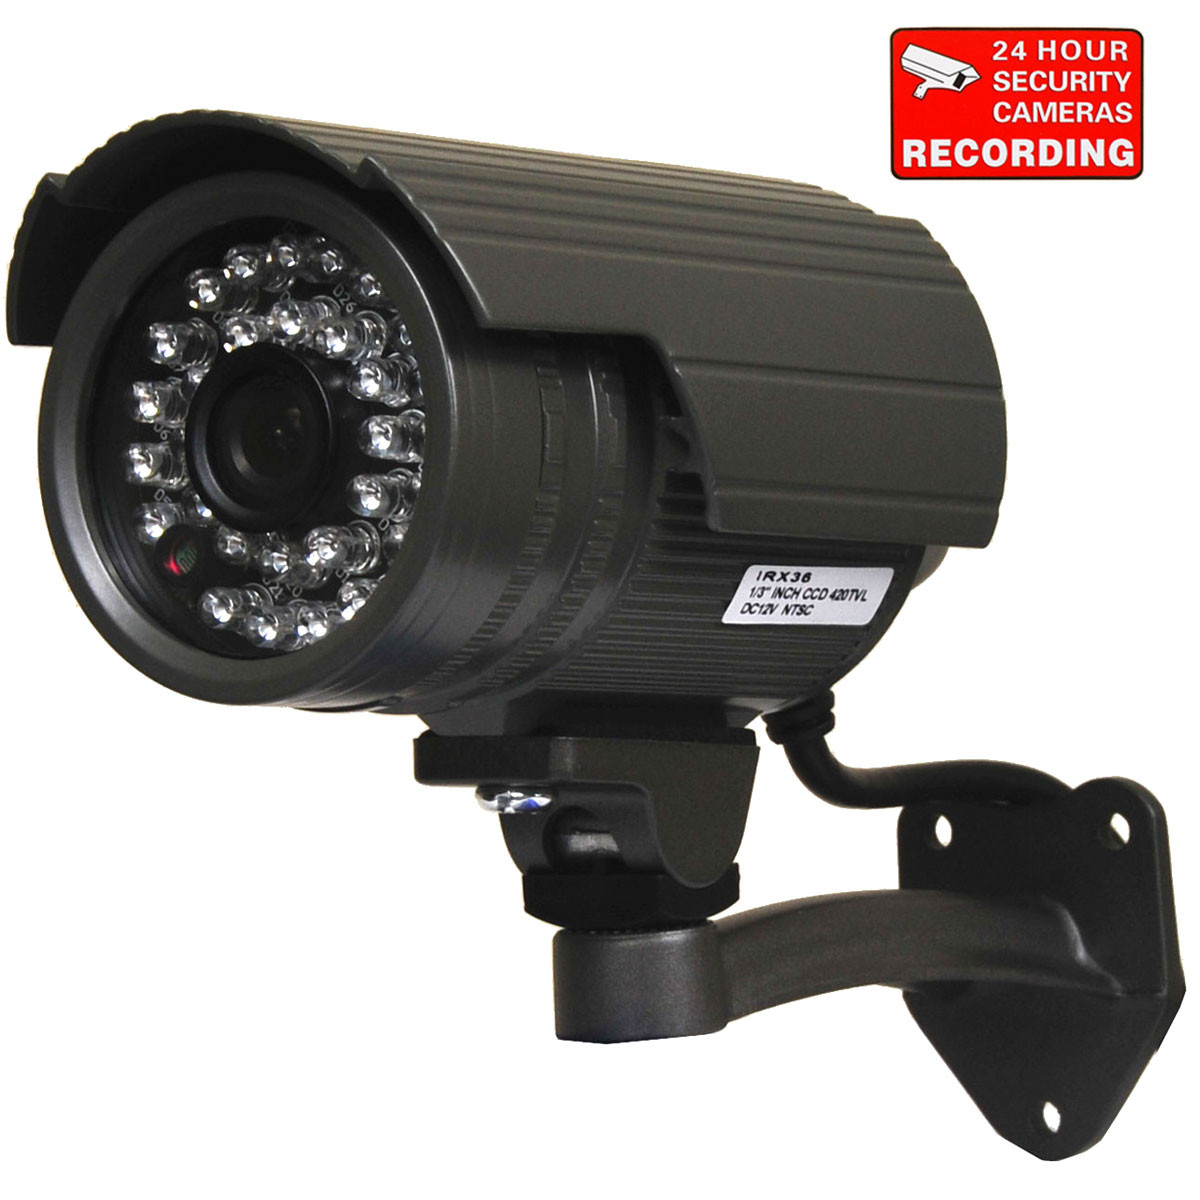 SONY IR Color CCD Wateproof CCTV Security Cameras 